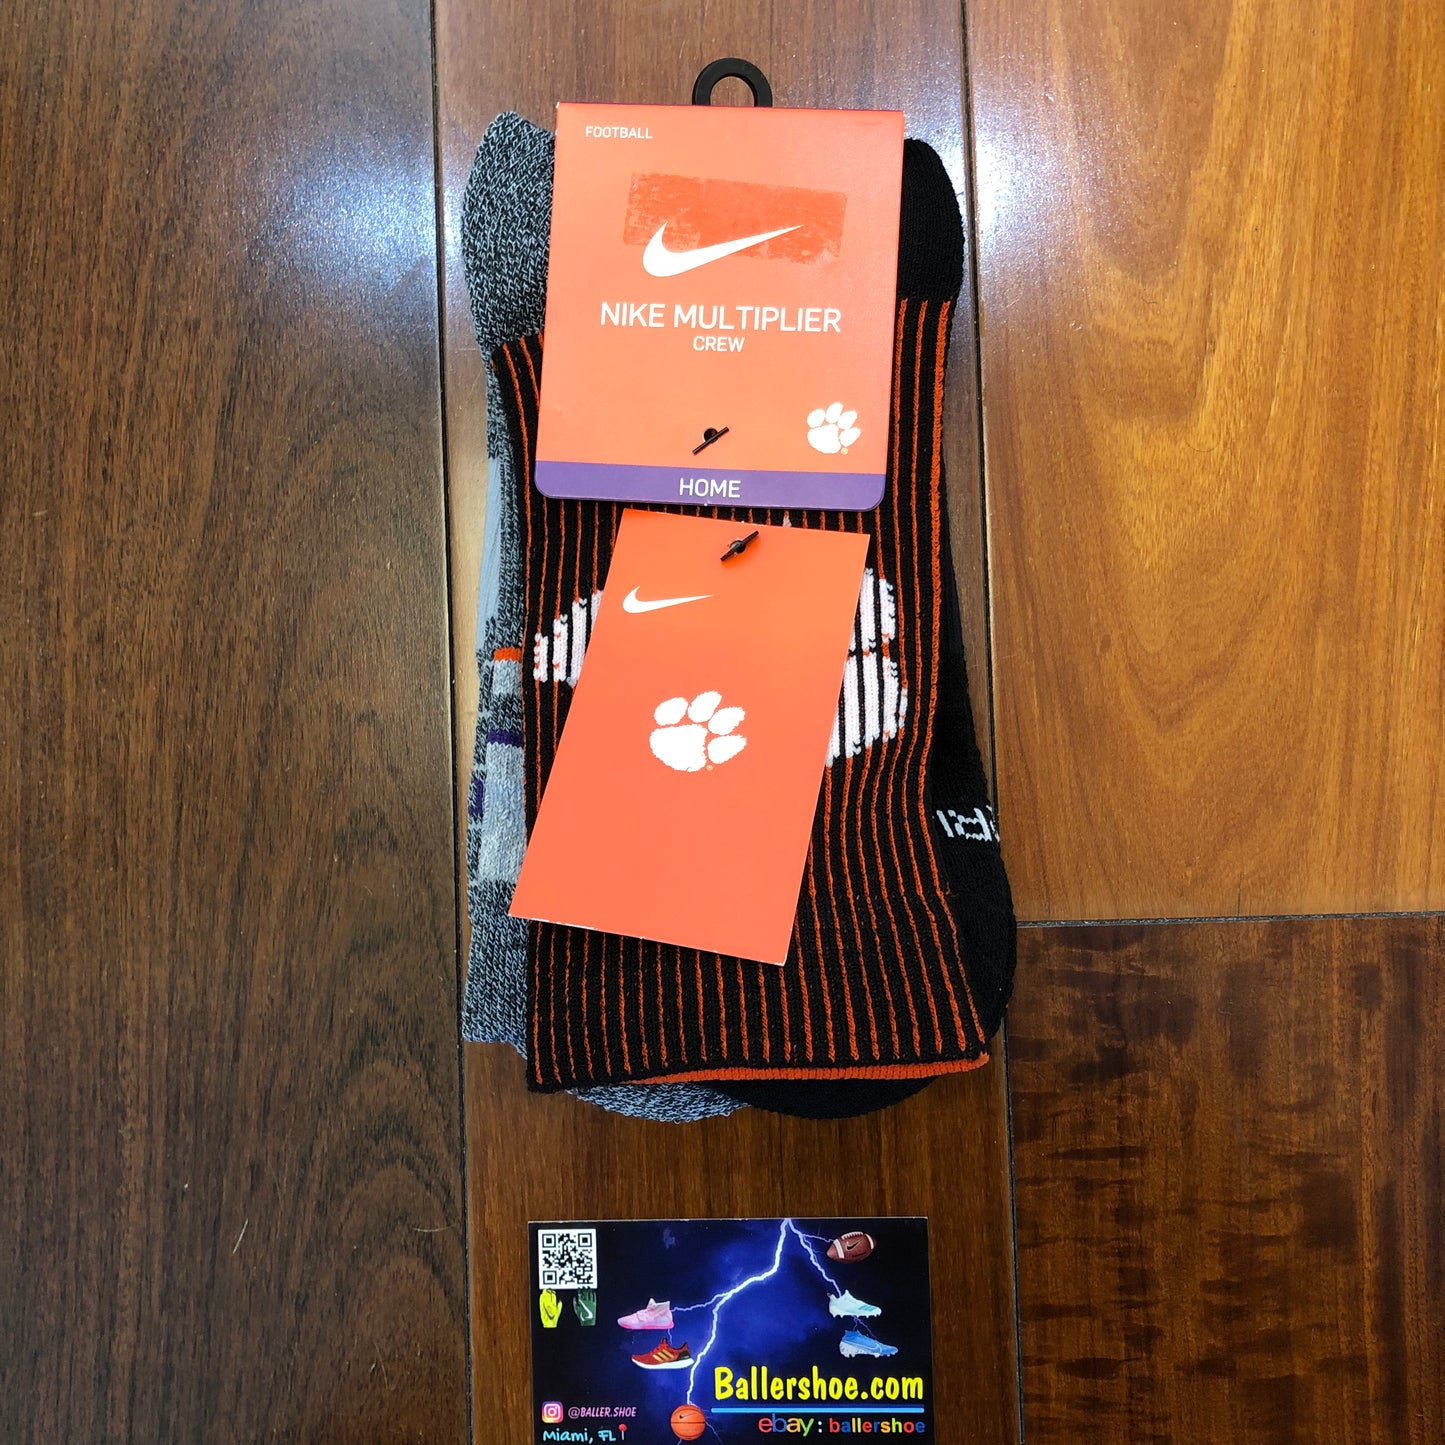 Nike Multiplier Clemson Tigers Crew Socks